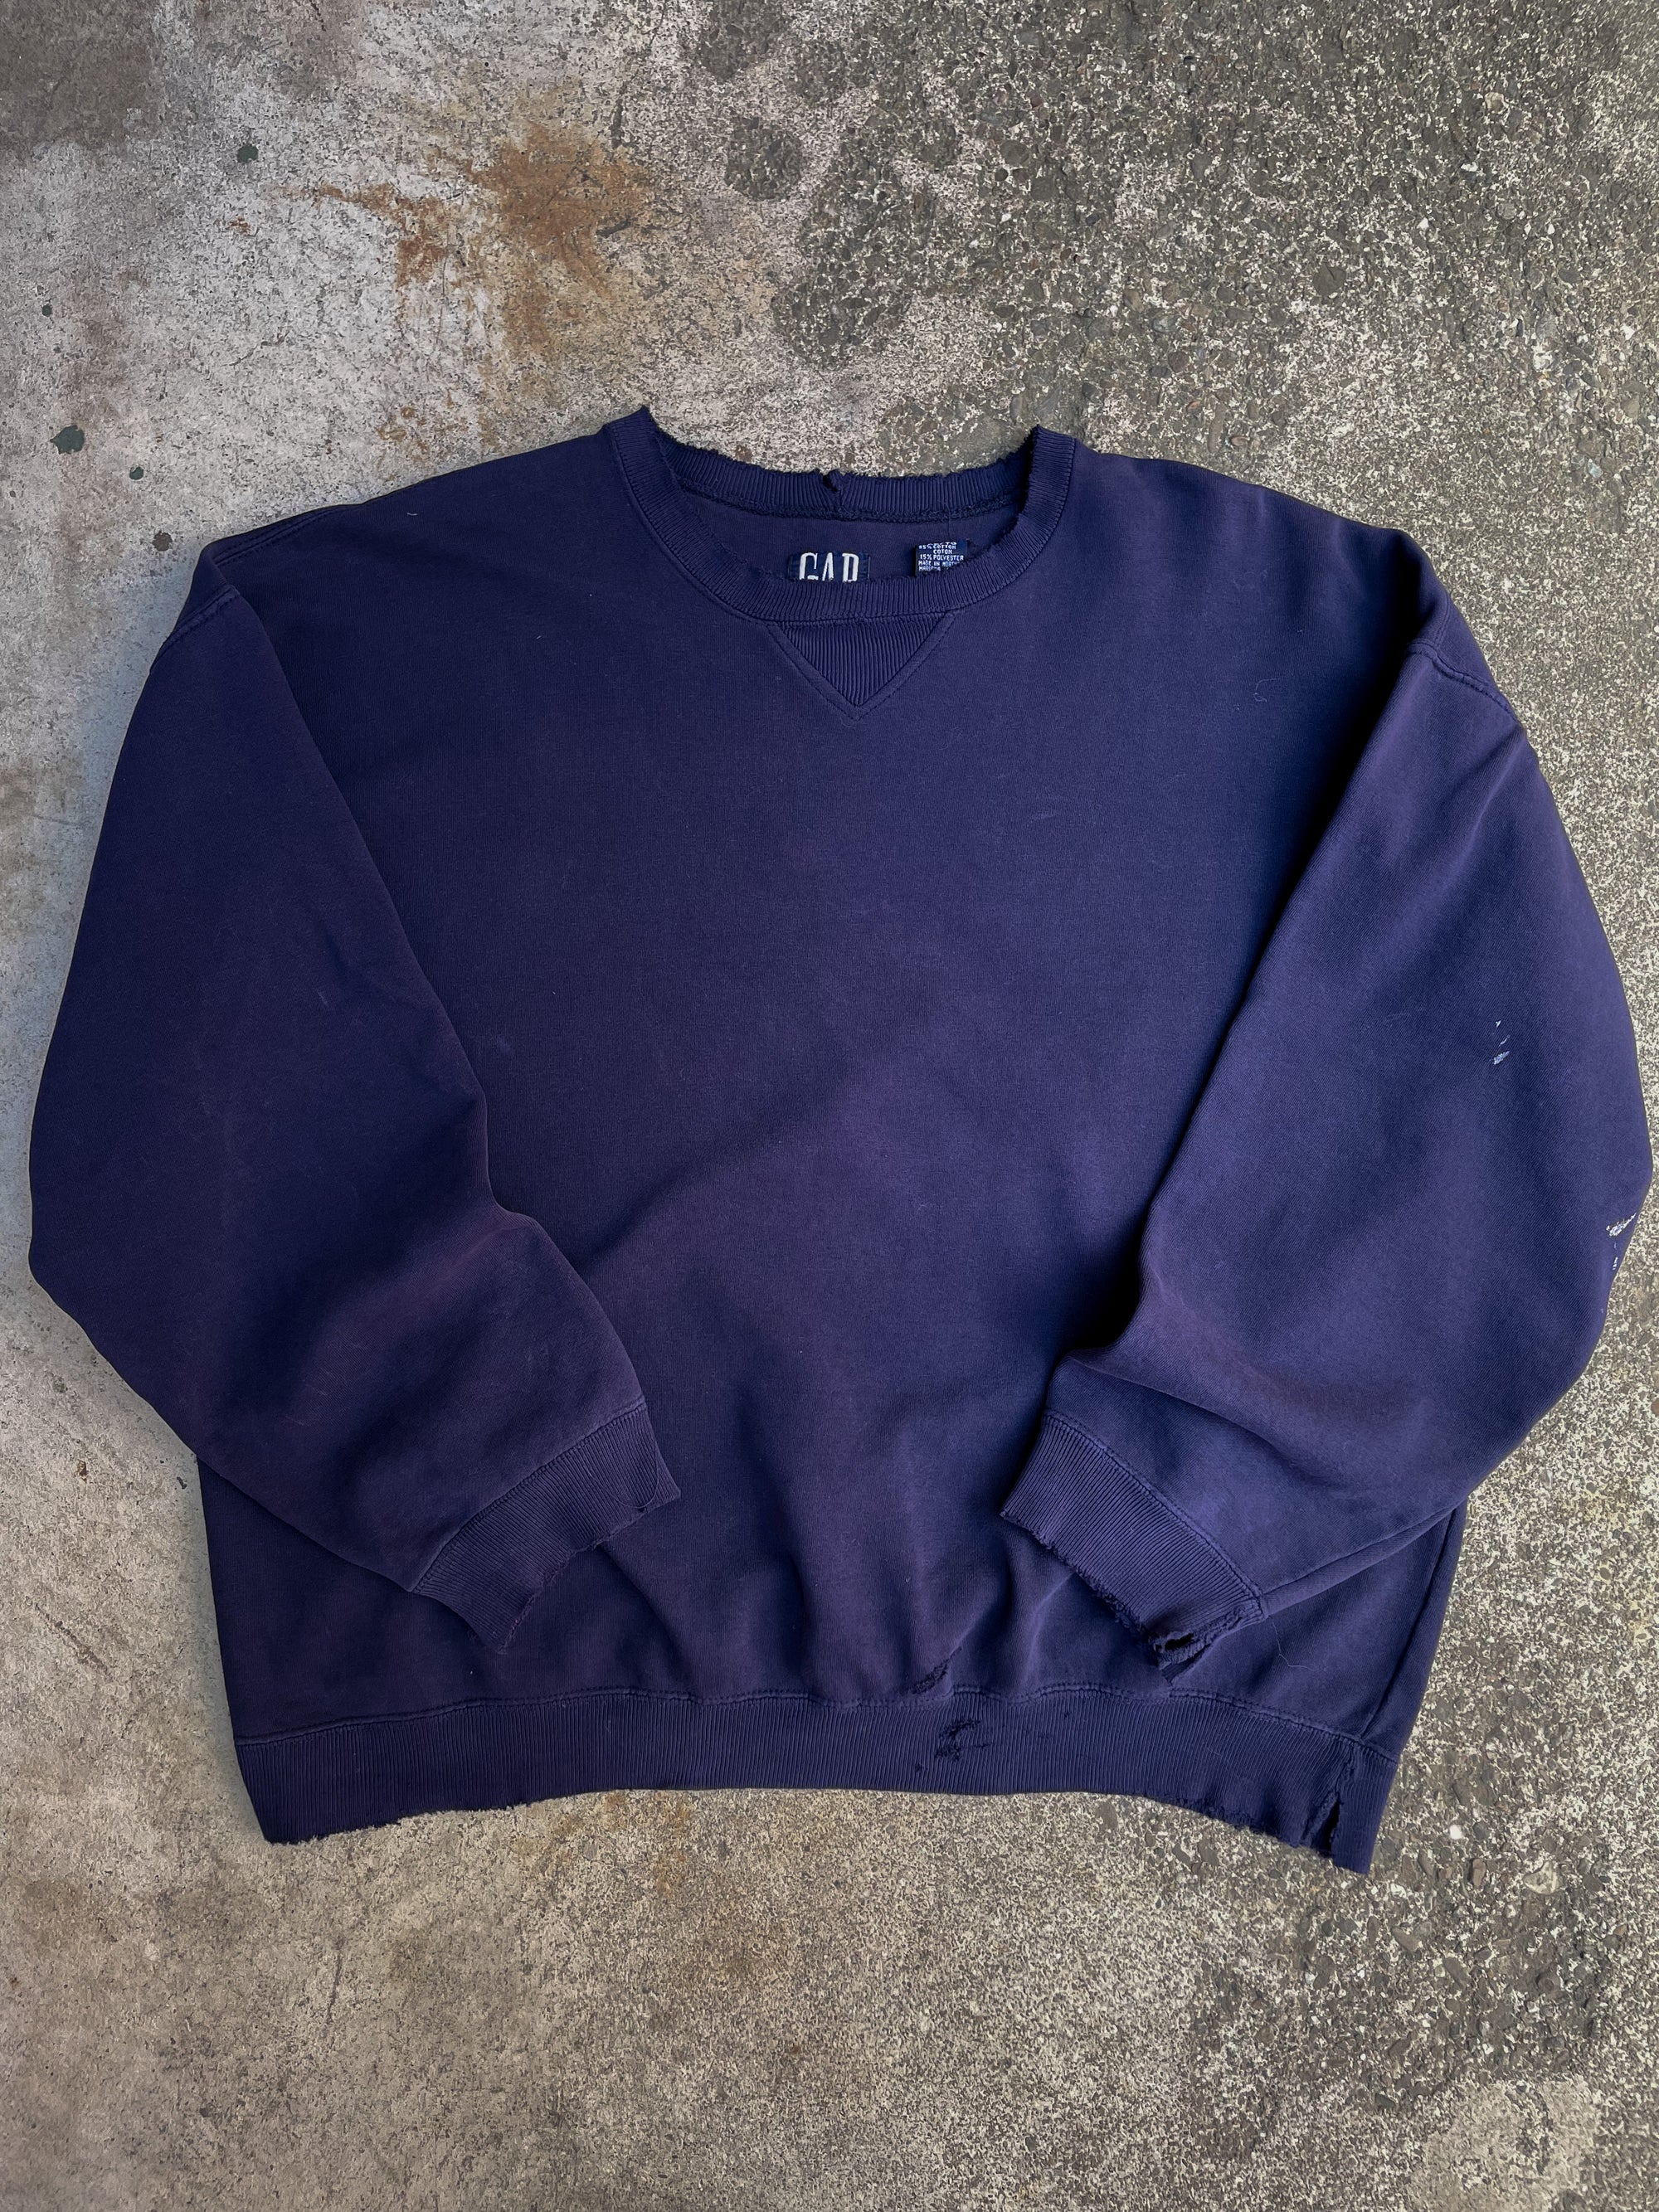 Vintage Gap Distressed Faded Indigo Blank Sweatshirt